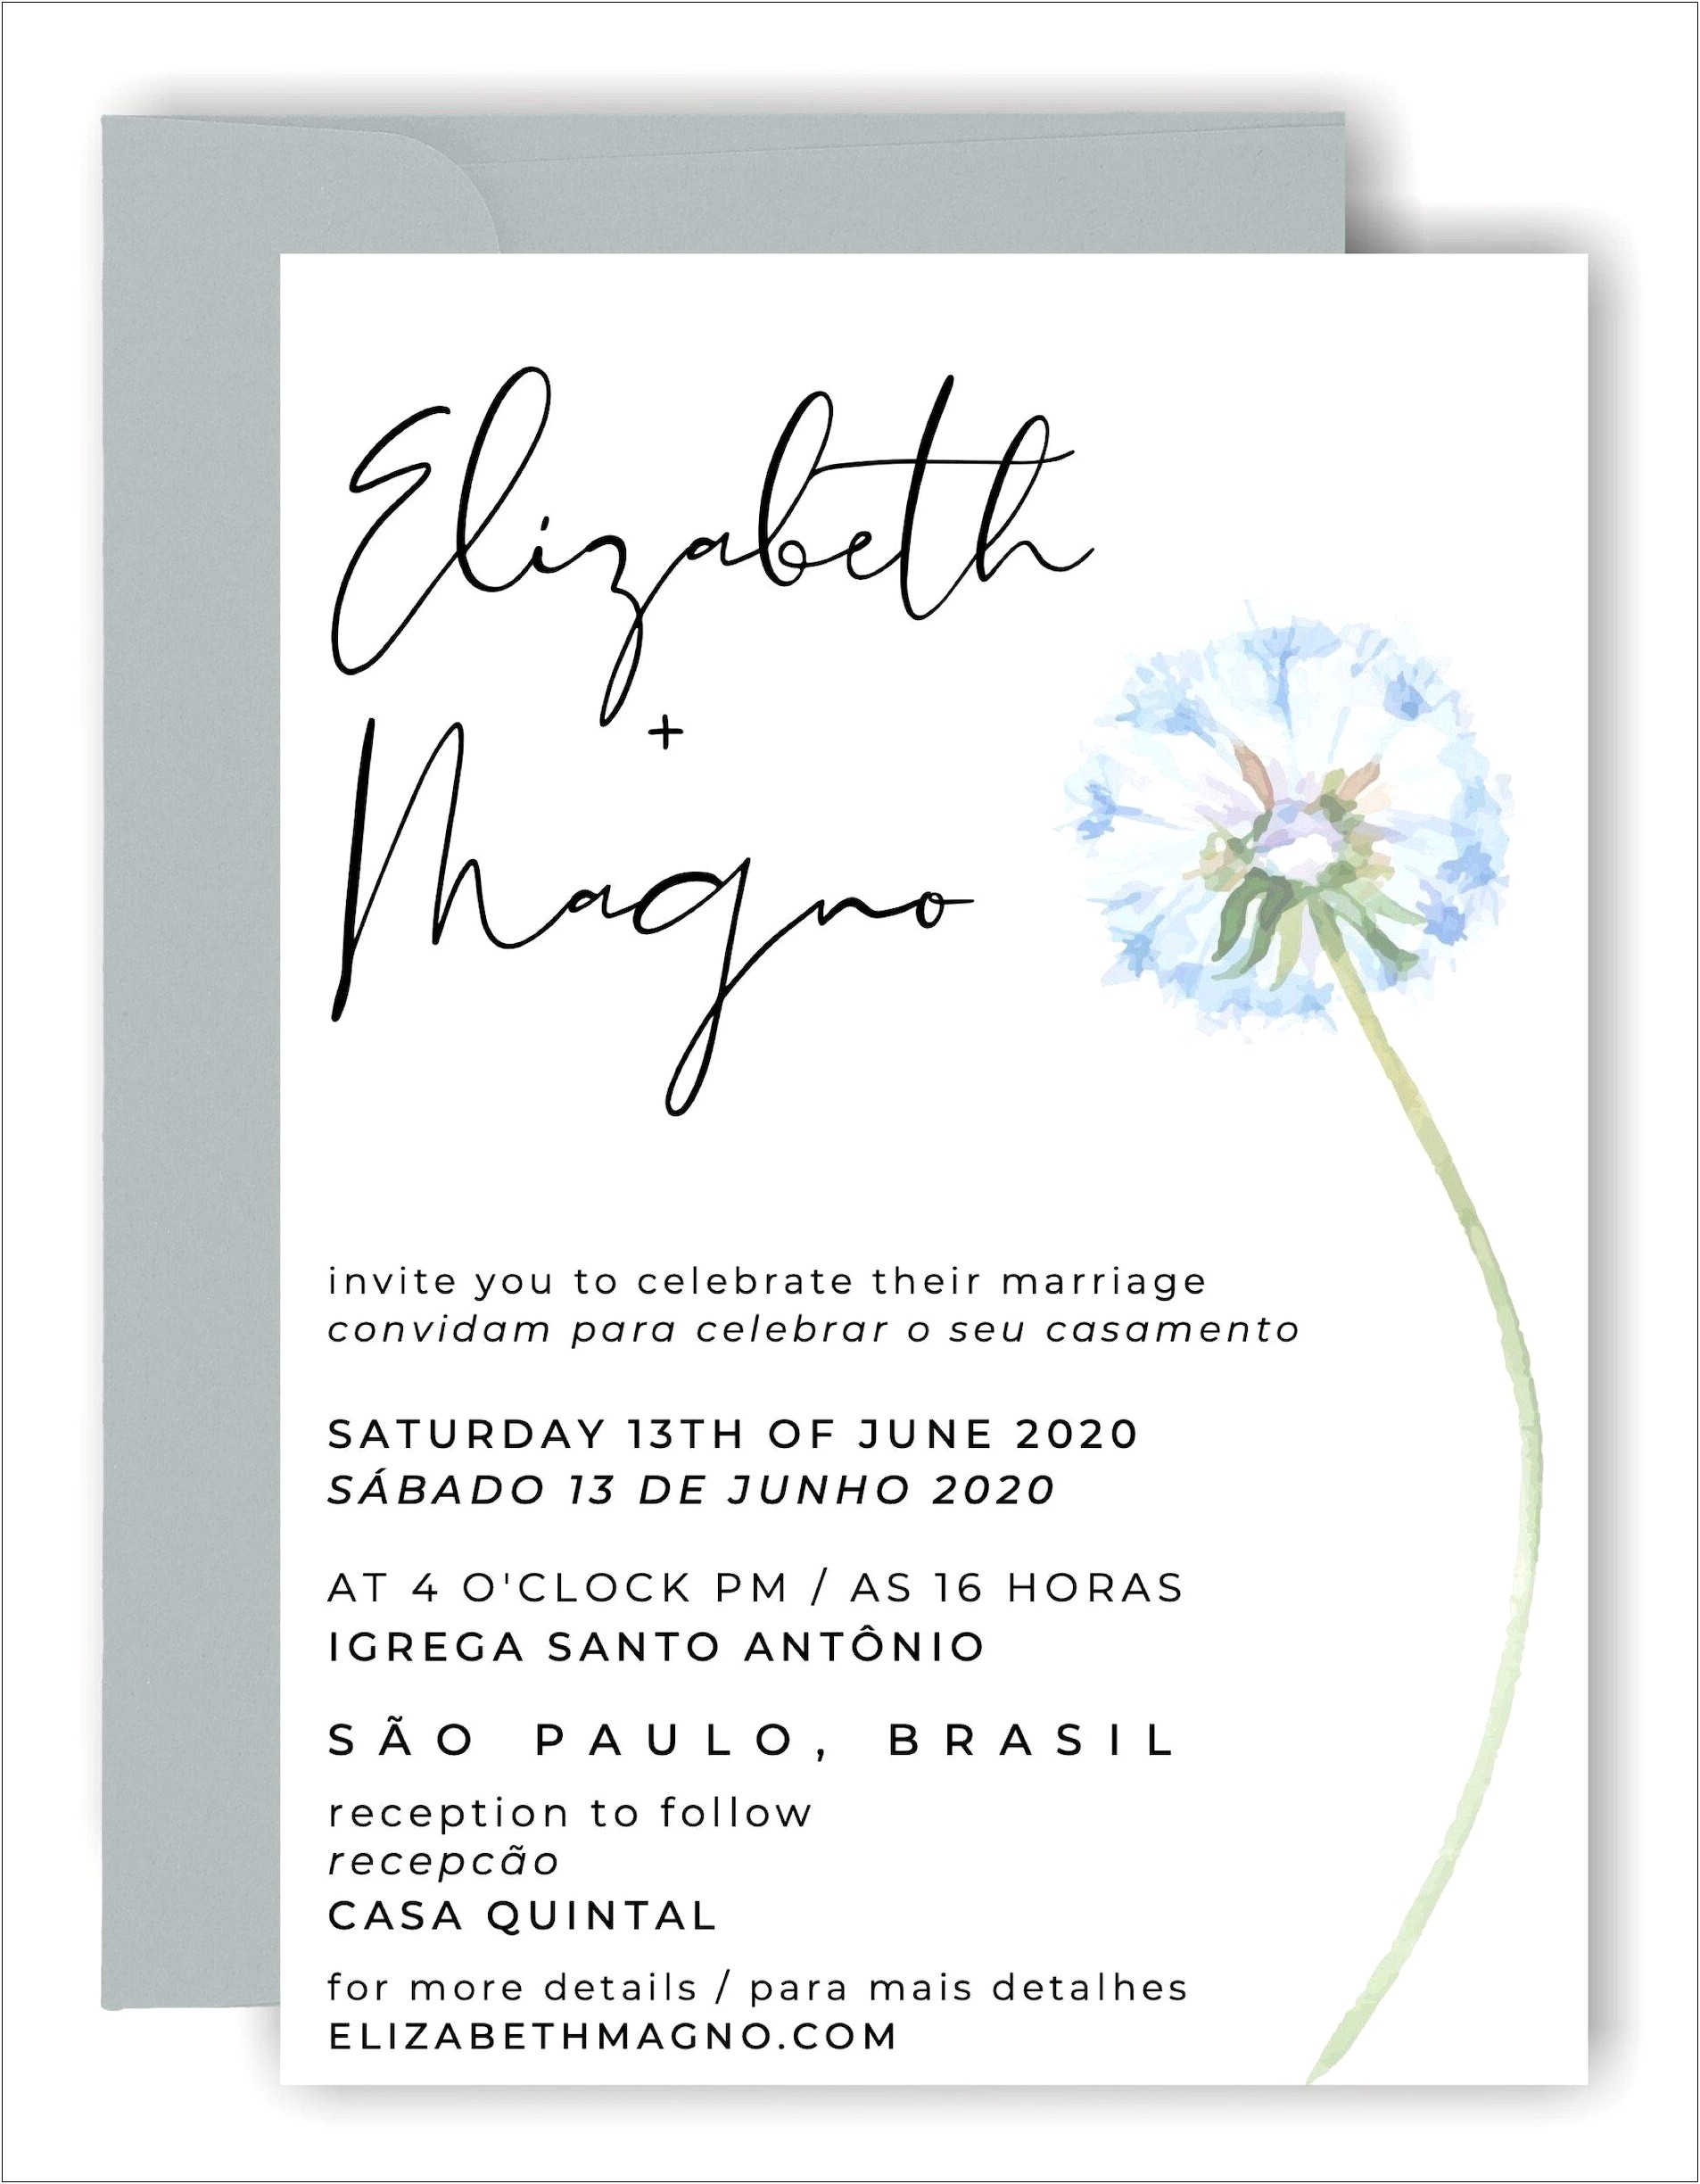 Reception To Follow In Spanish Wedding Invitation Wording